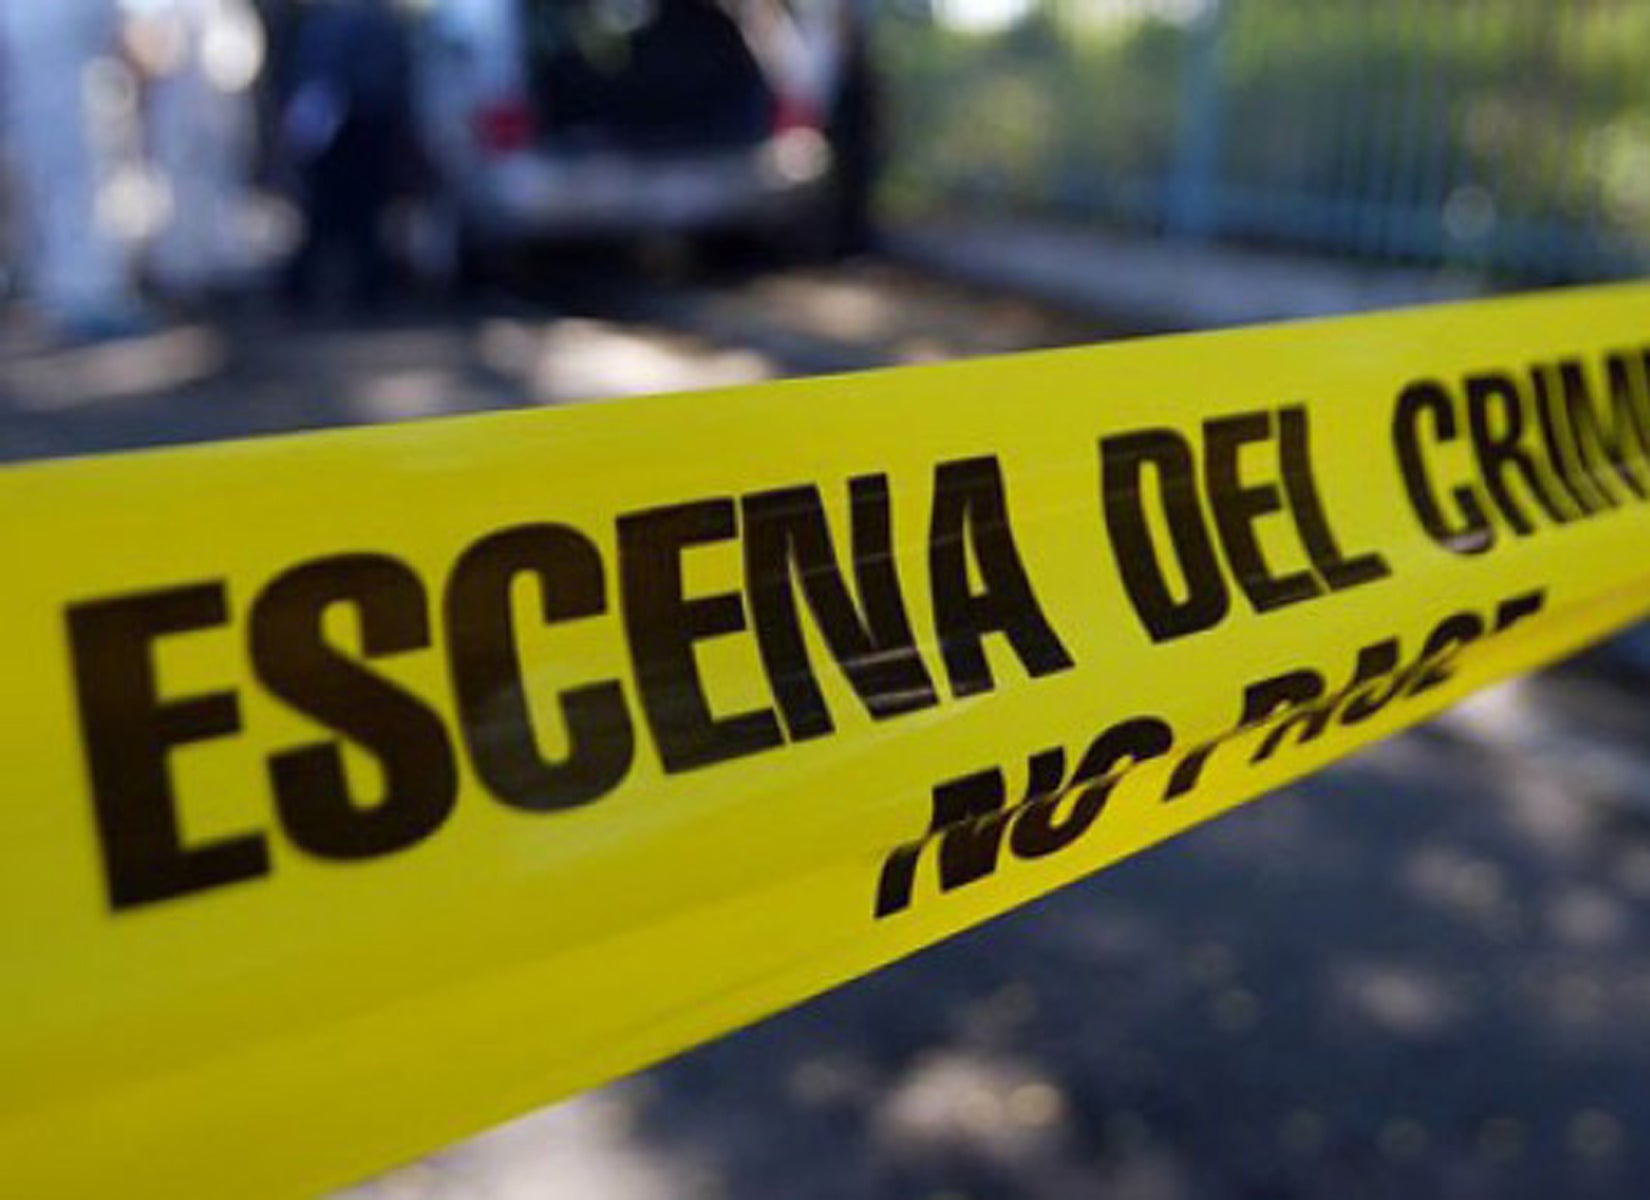 Fotografía ilustrativa de una escena del crimen.  (Foto Prensa Libre: Shutterstock)